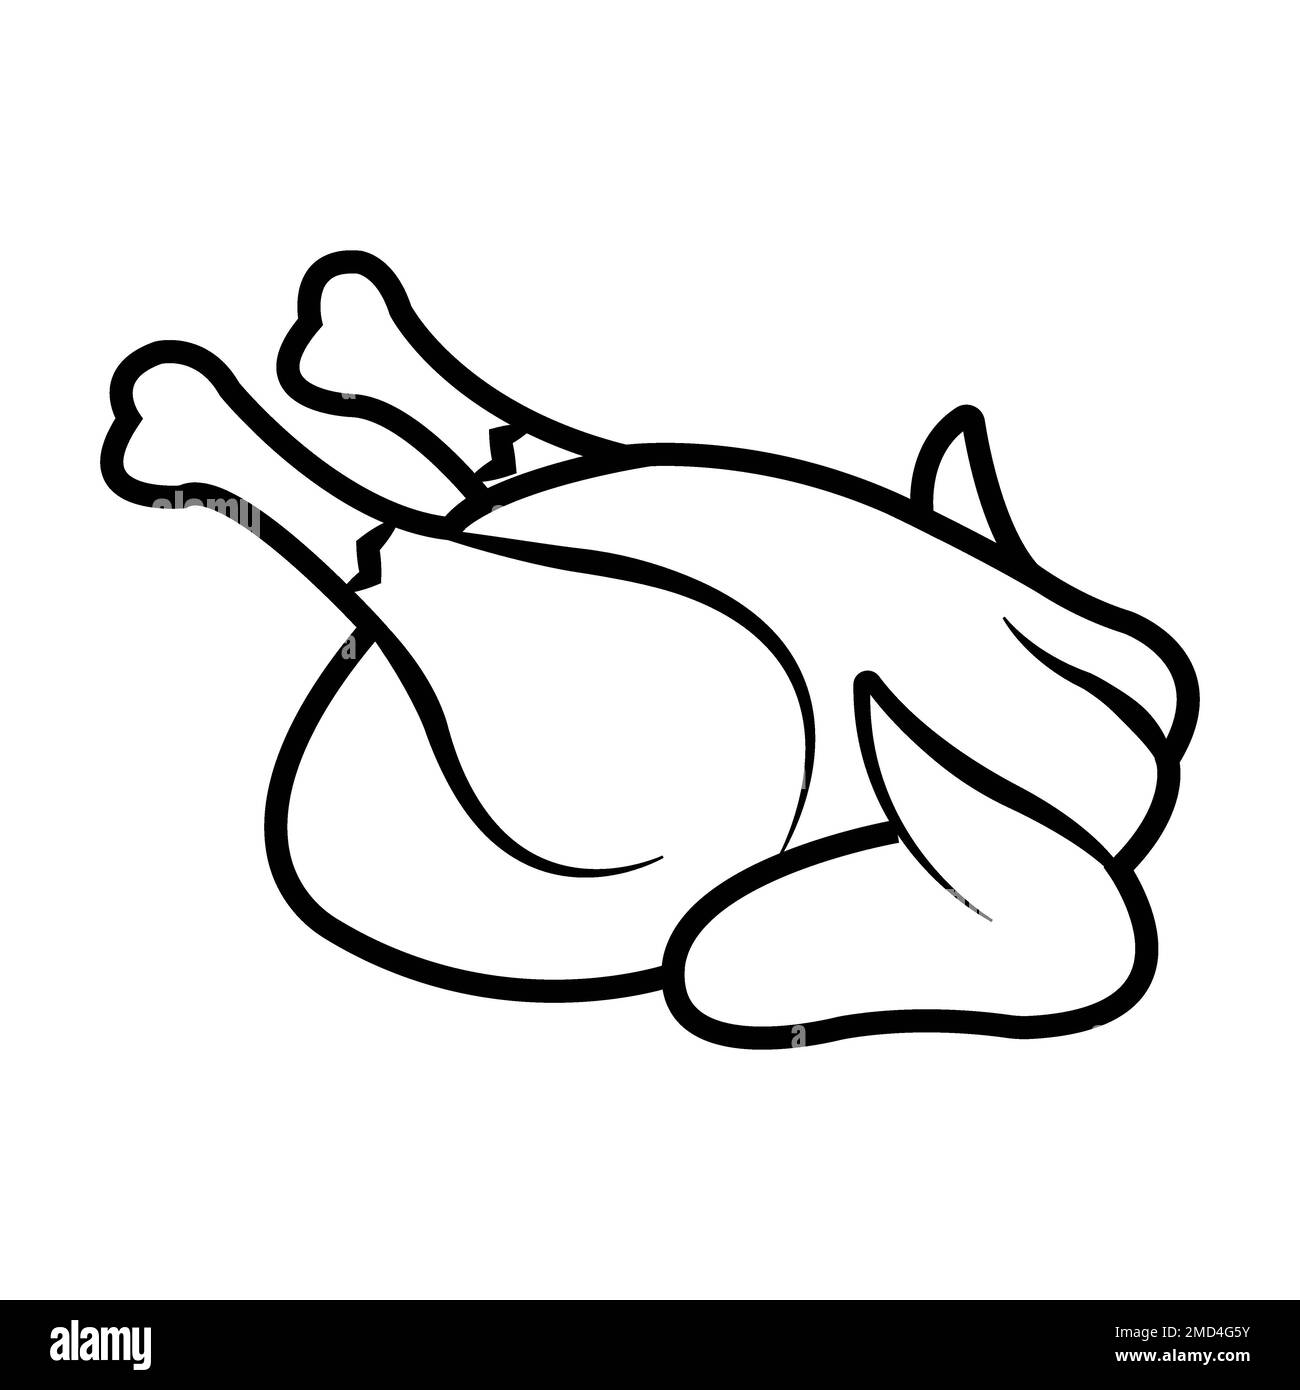 roast chicken icon logo vector design template Stock Photo